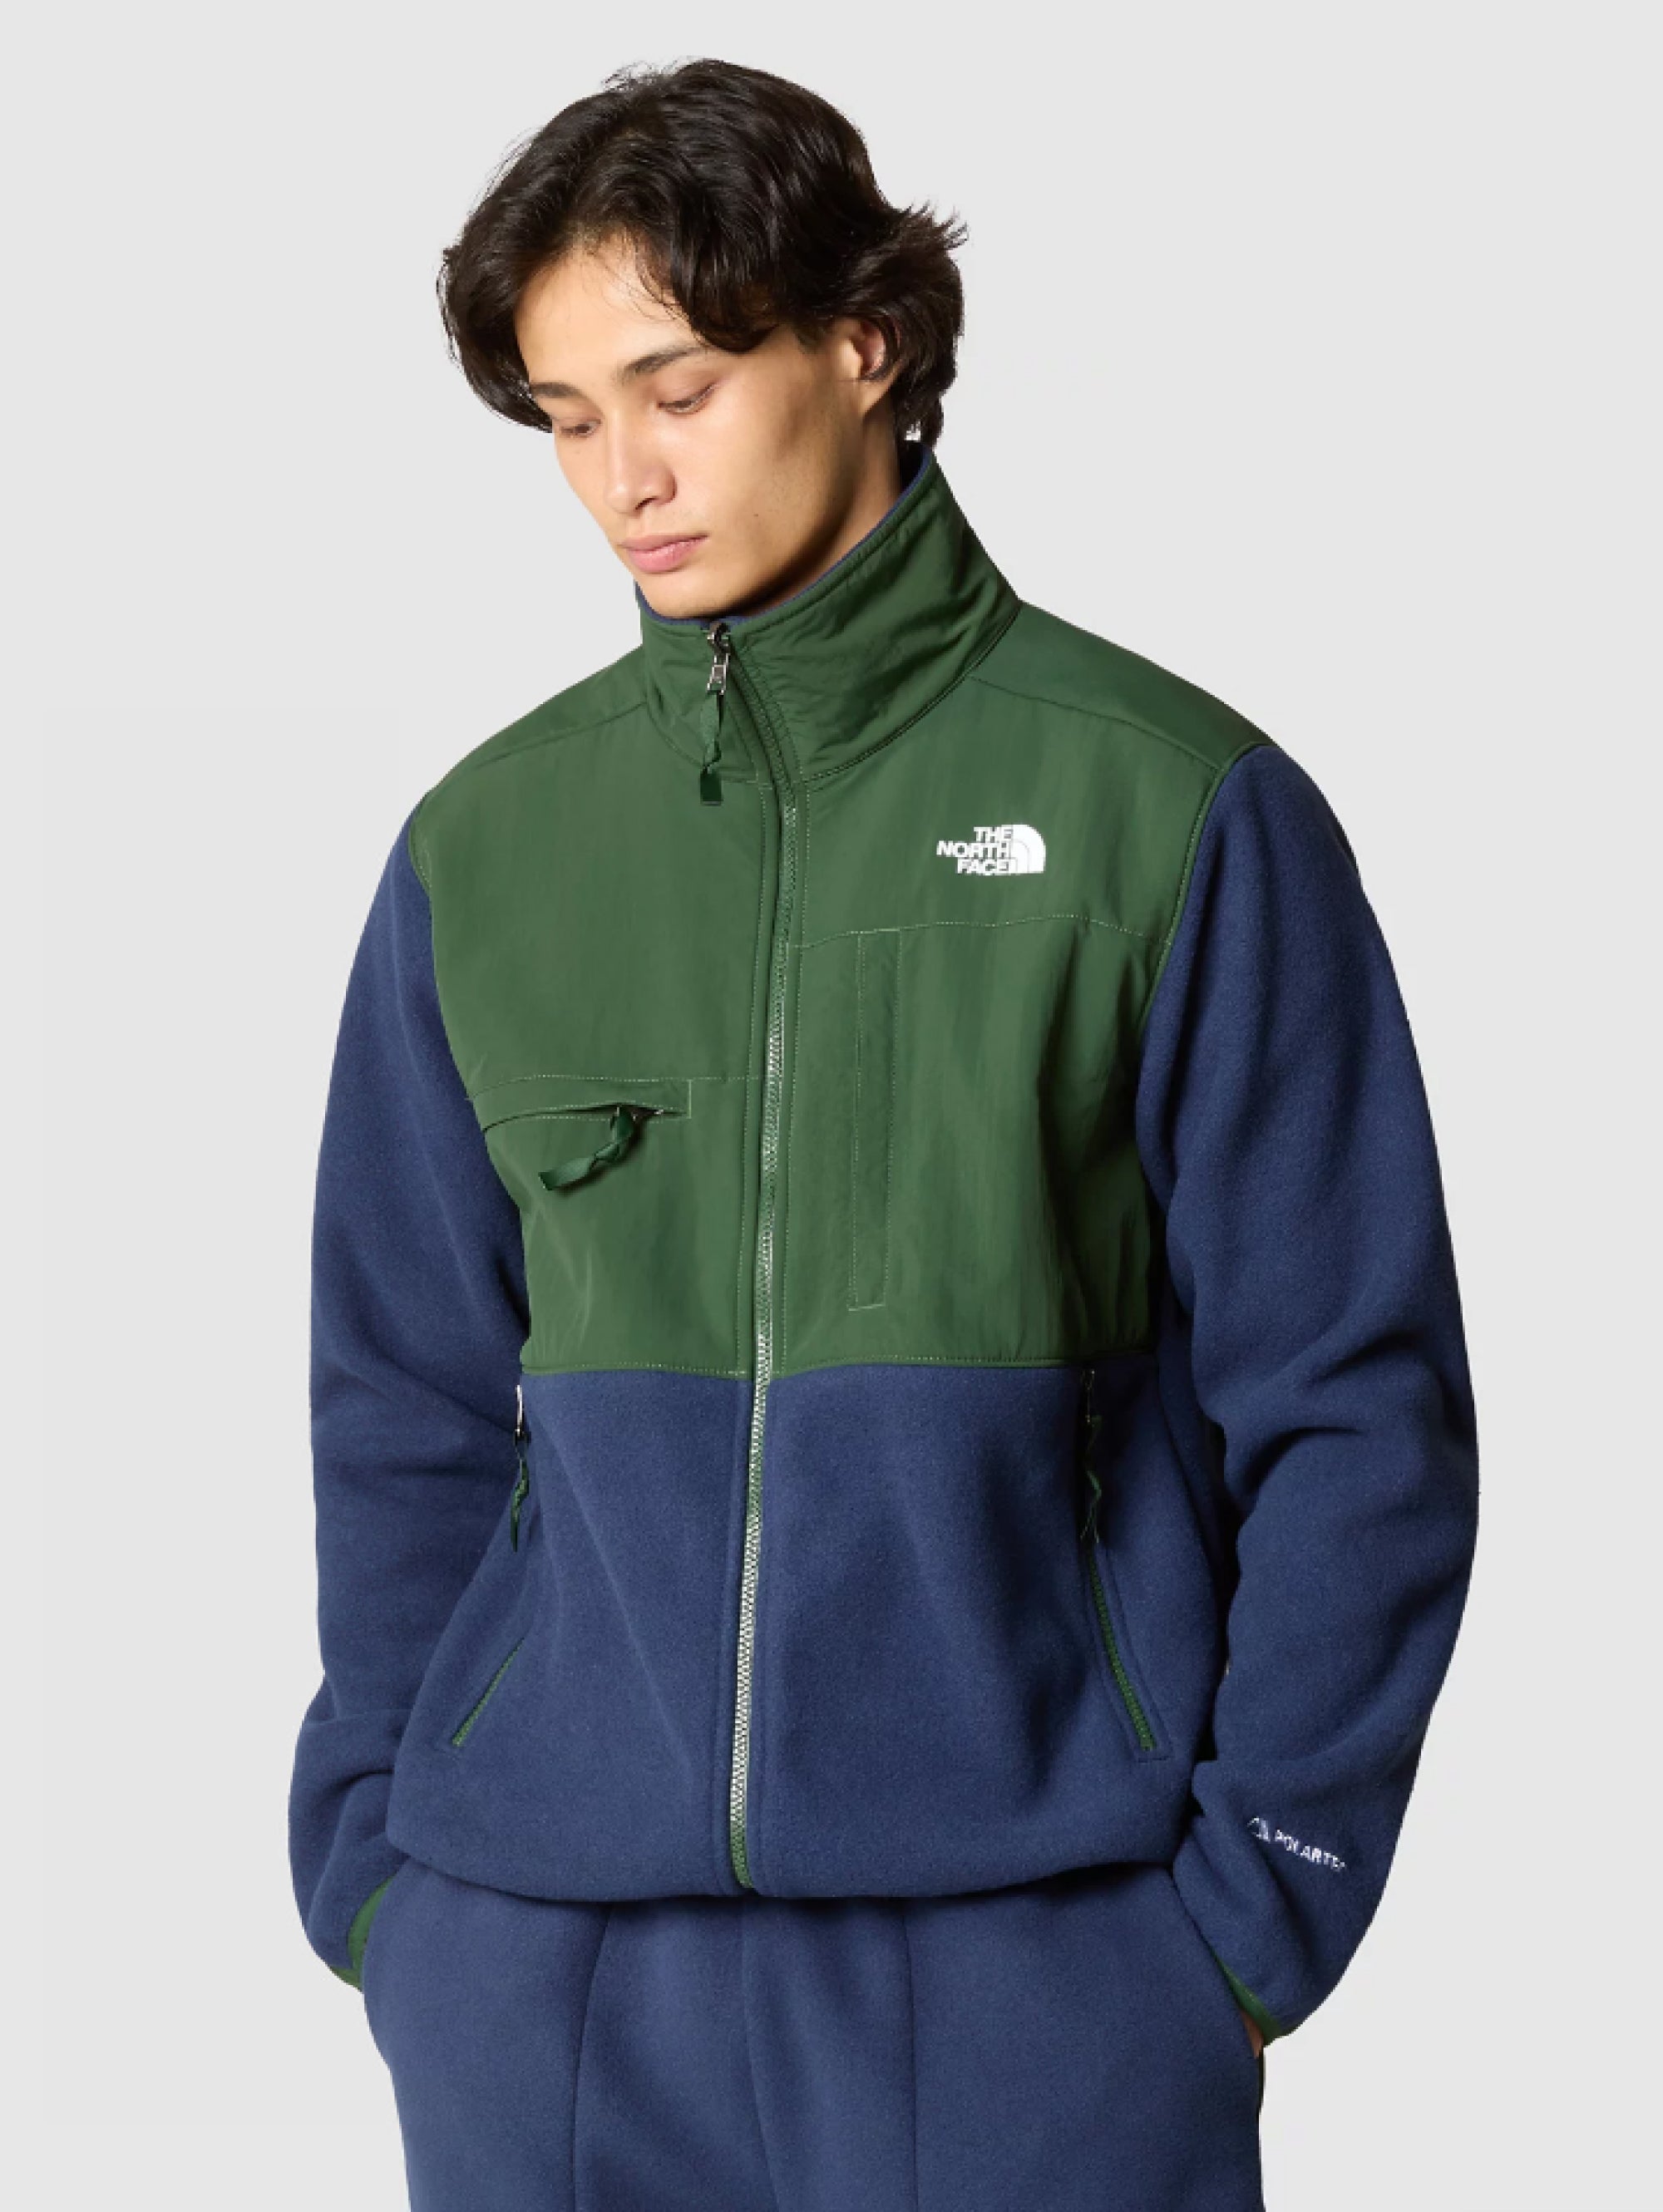 Green/Blue Recycled Polartec Fleece Denali Jacket